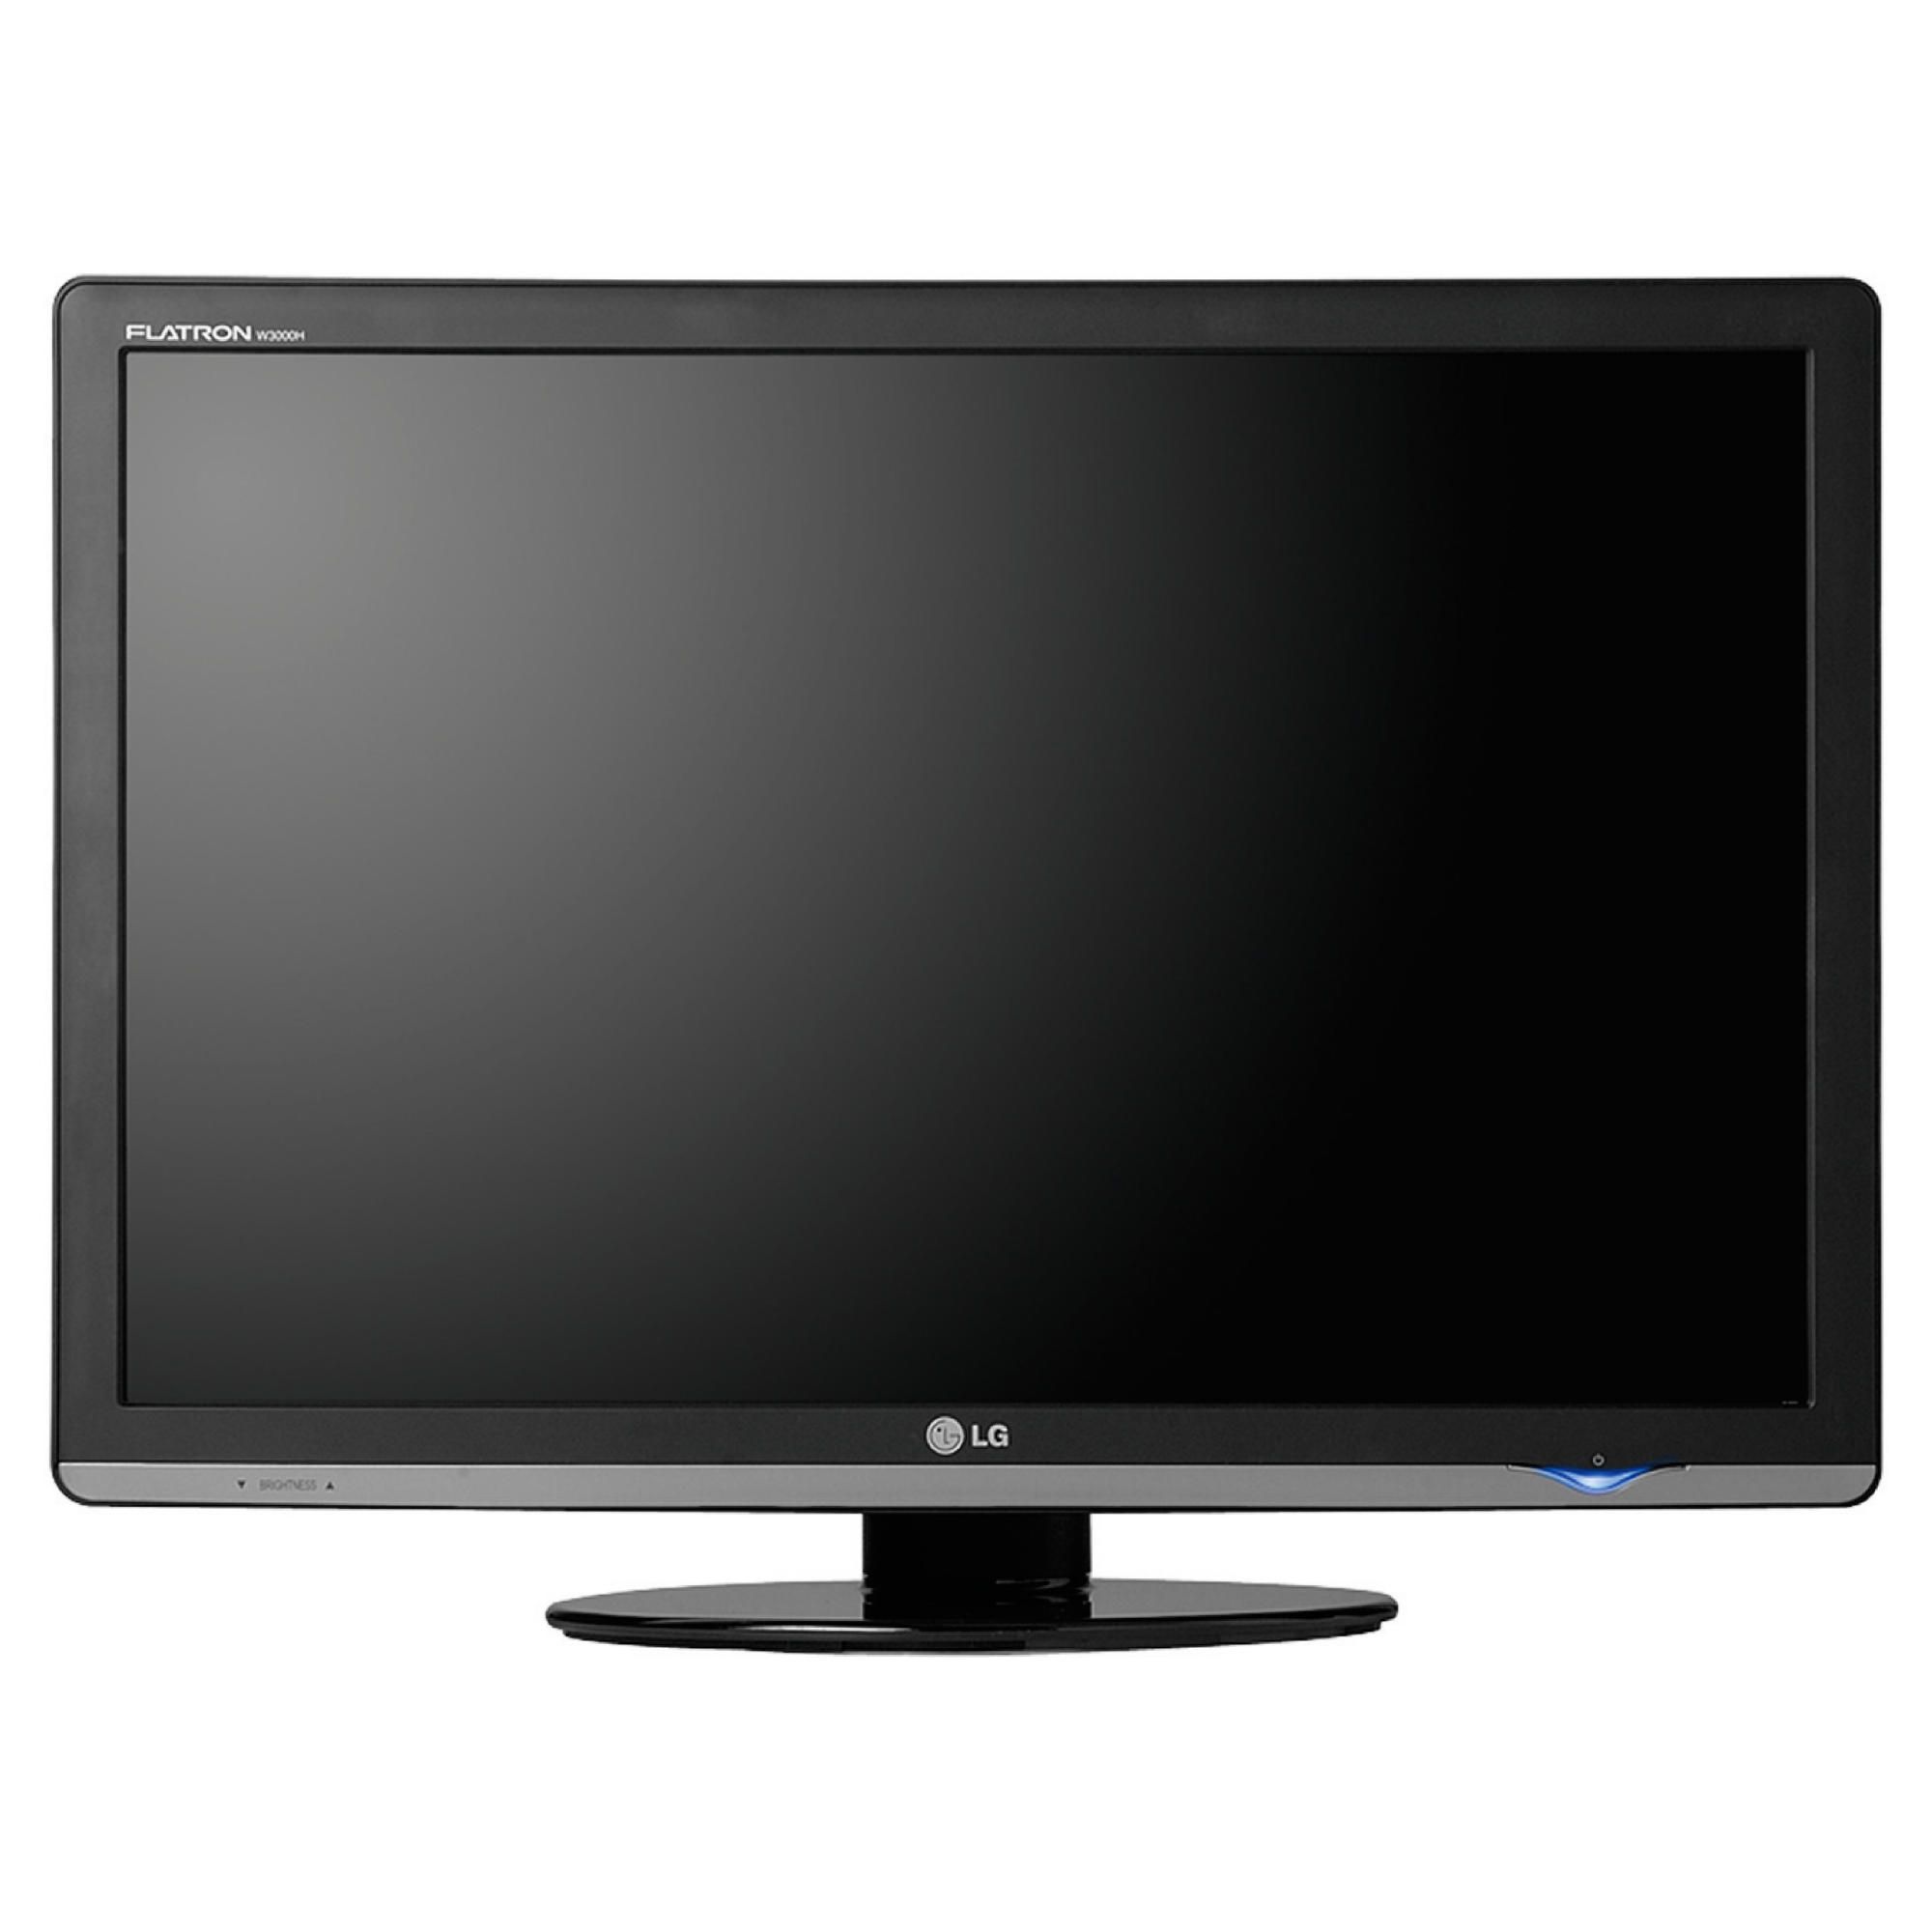 LG W3000H-BN 30.0'' Monitor at Tesco Direct